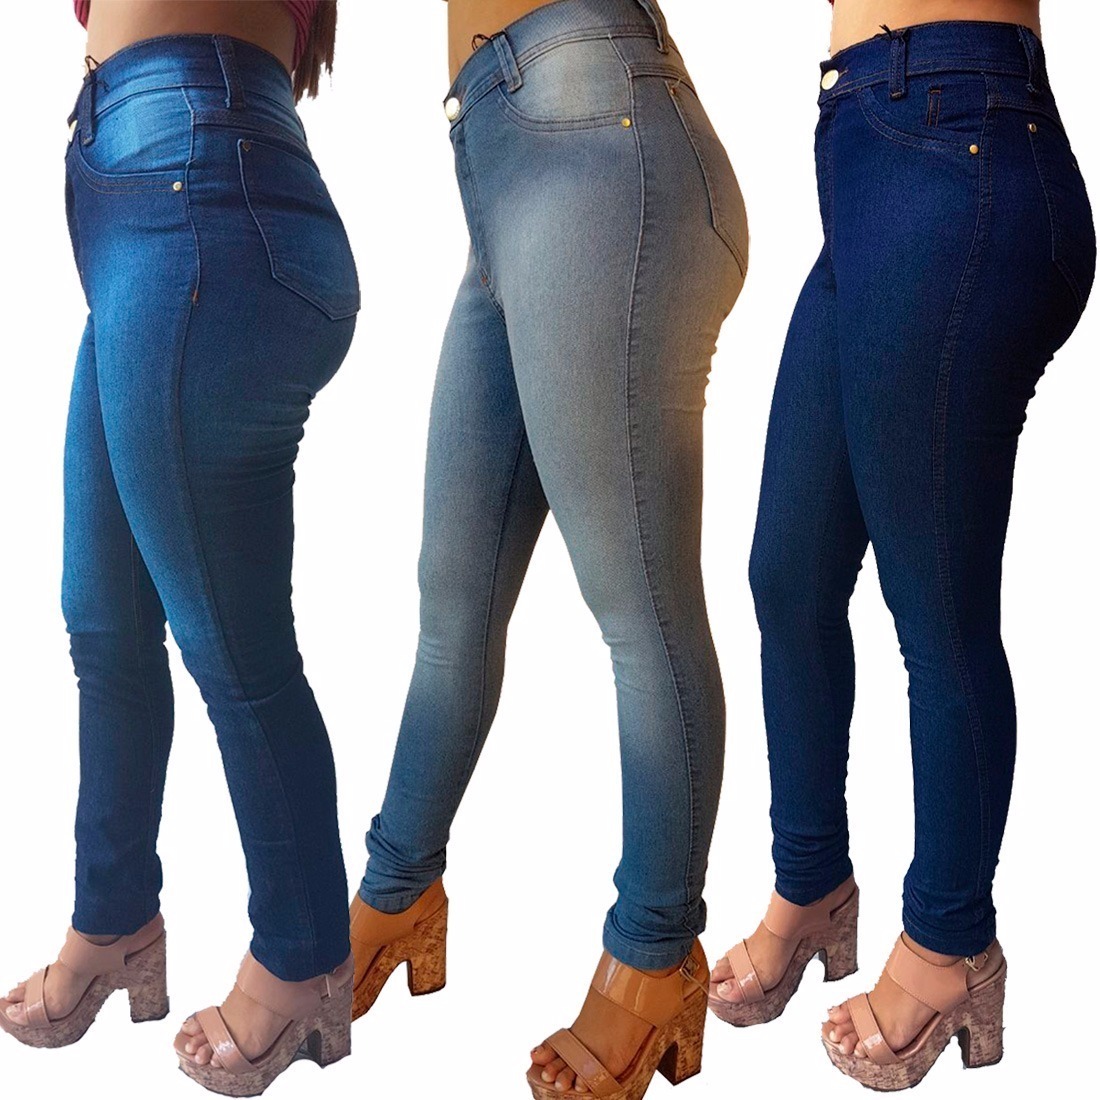 fotos de shorts jeans cintura alta desfiado